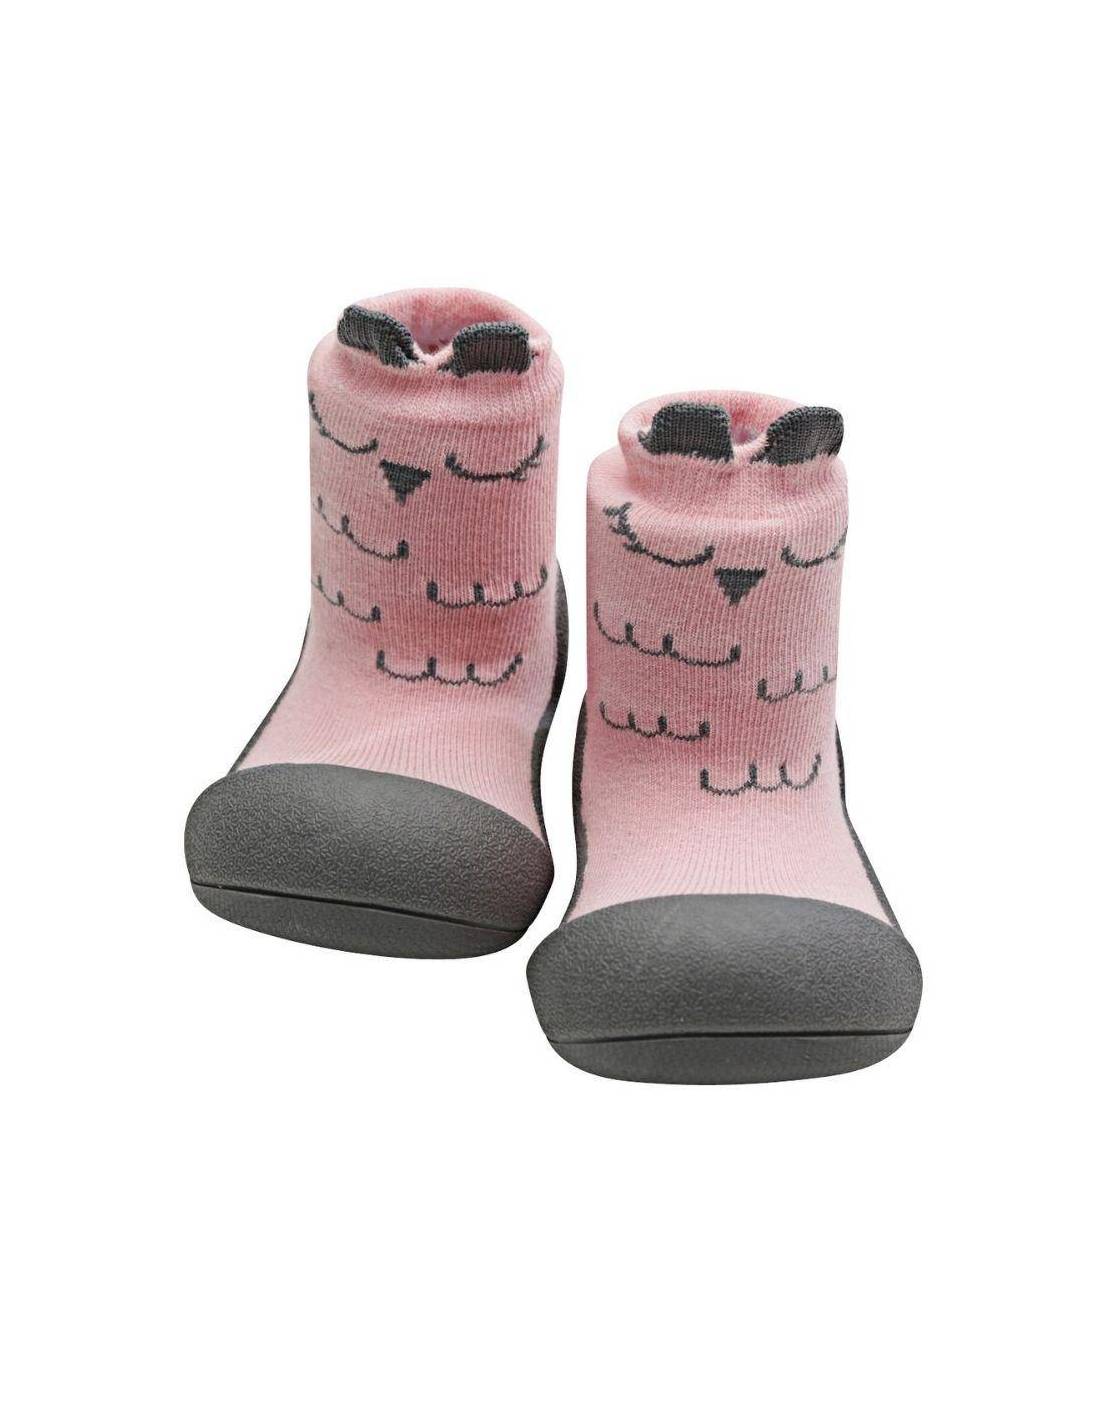 Curolletes - Zapatos Attipas Rabbit Pink